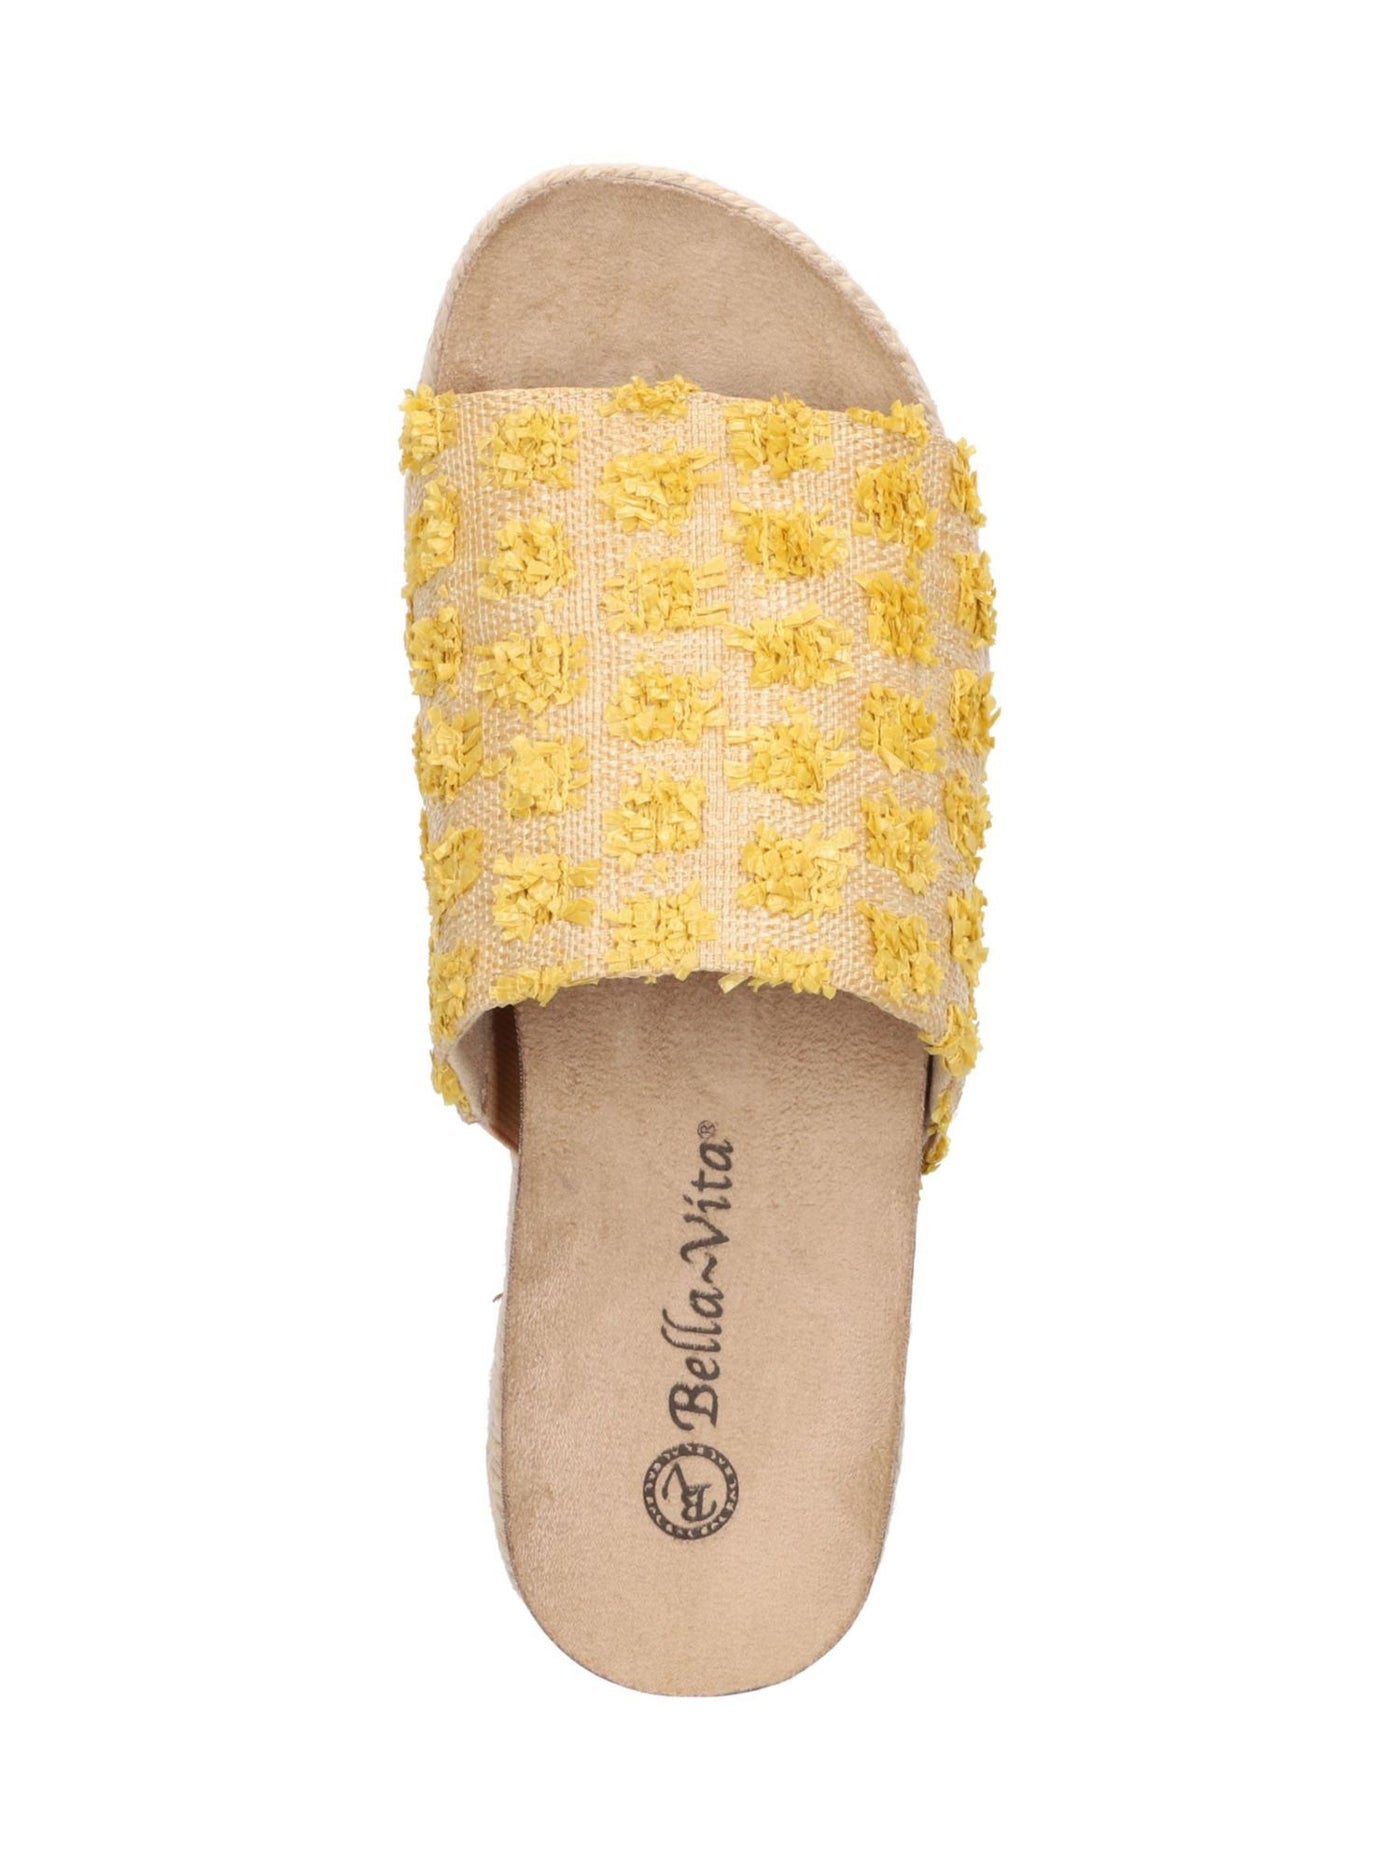 BELLA VITA Womens Yellow Pom Poms Padded Satara Round Toe Platform Slip On Slide Sandals Shoes 12 M